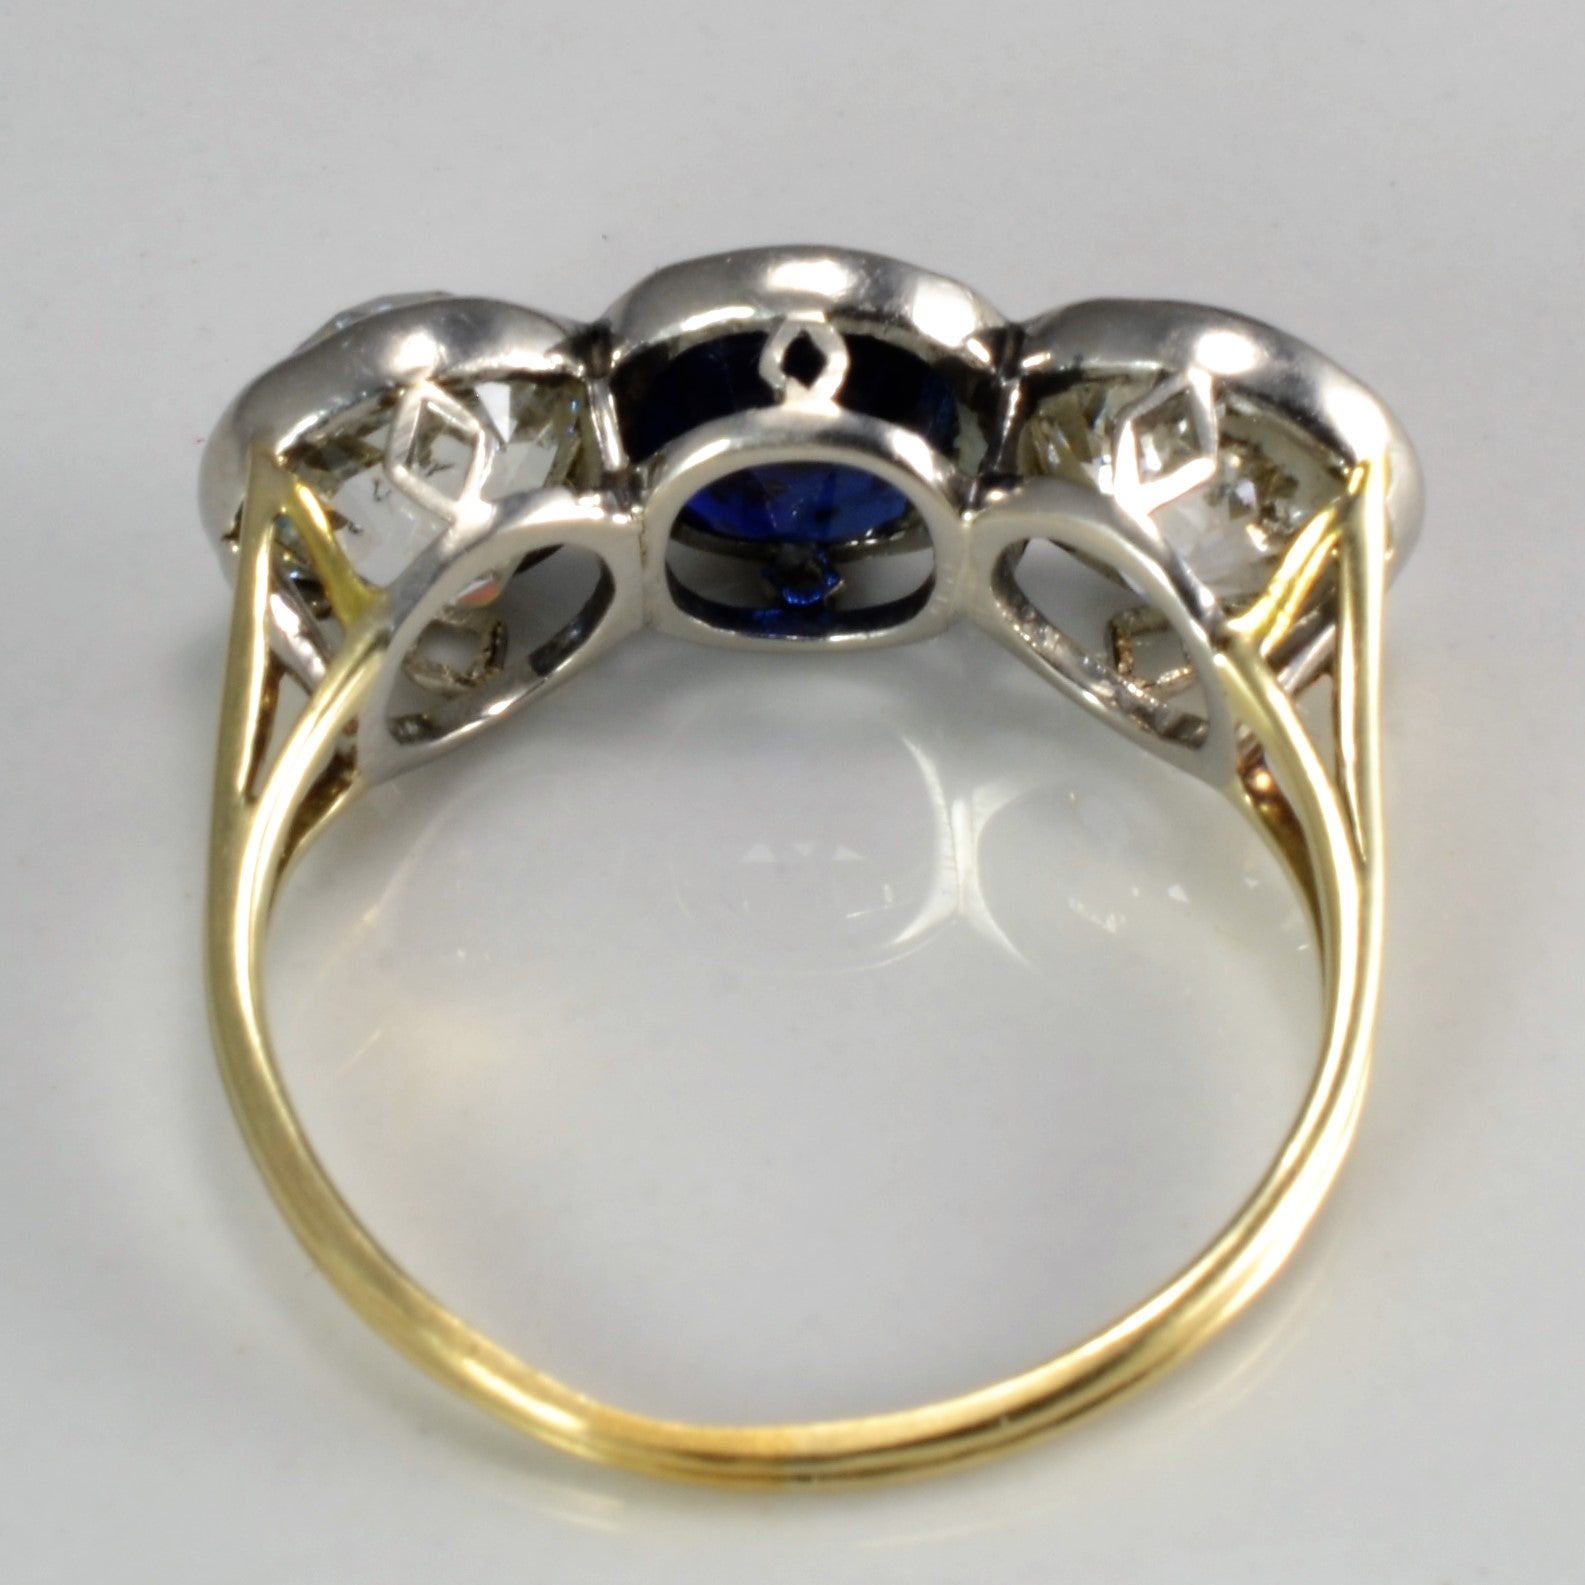 USA vintage diamond ring, vintage engagement ring for sale